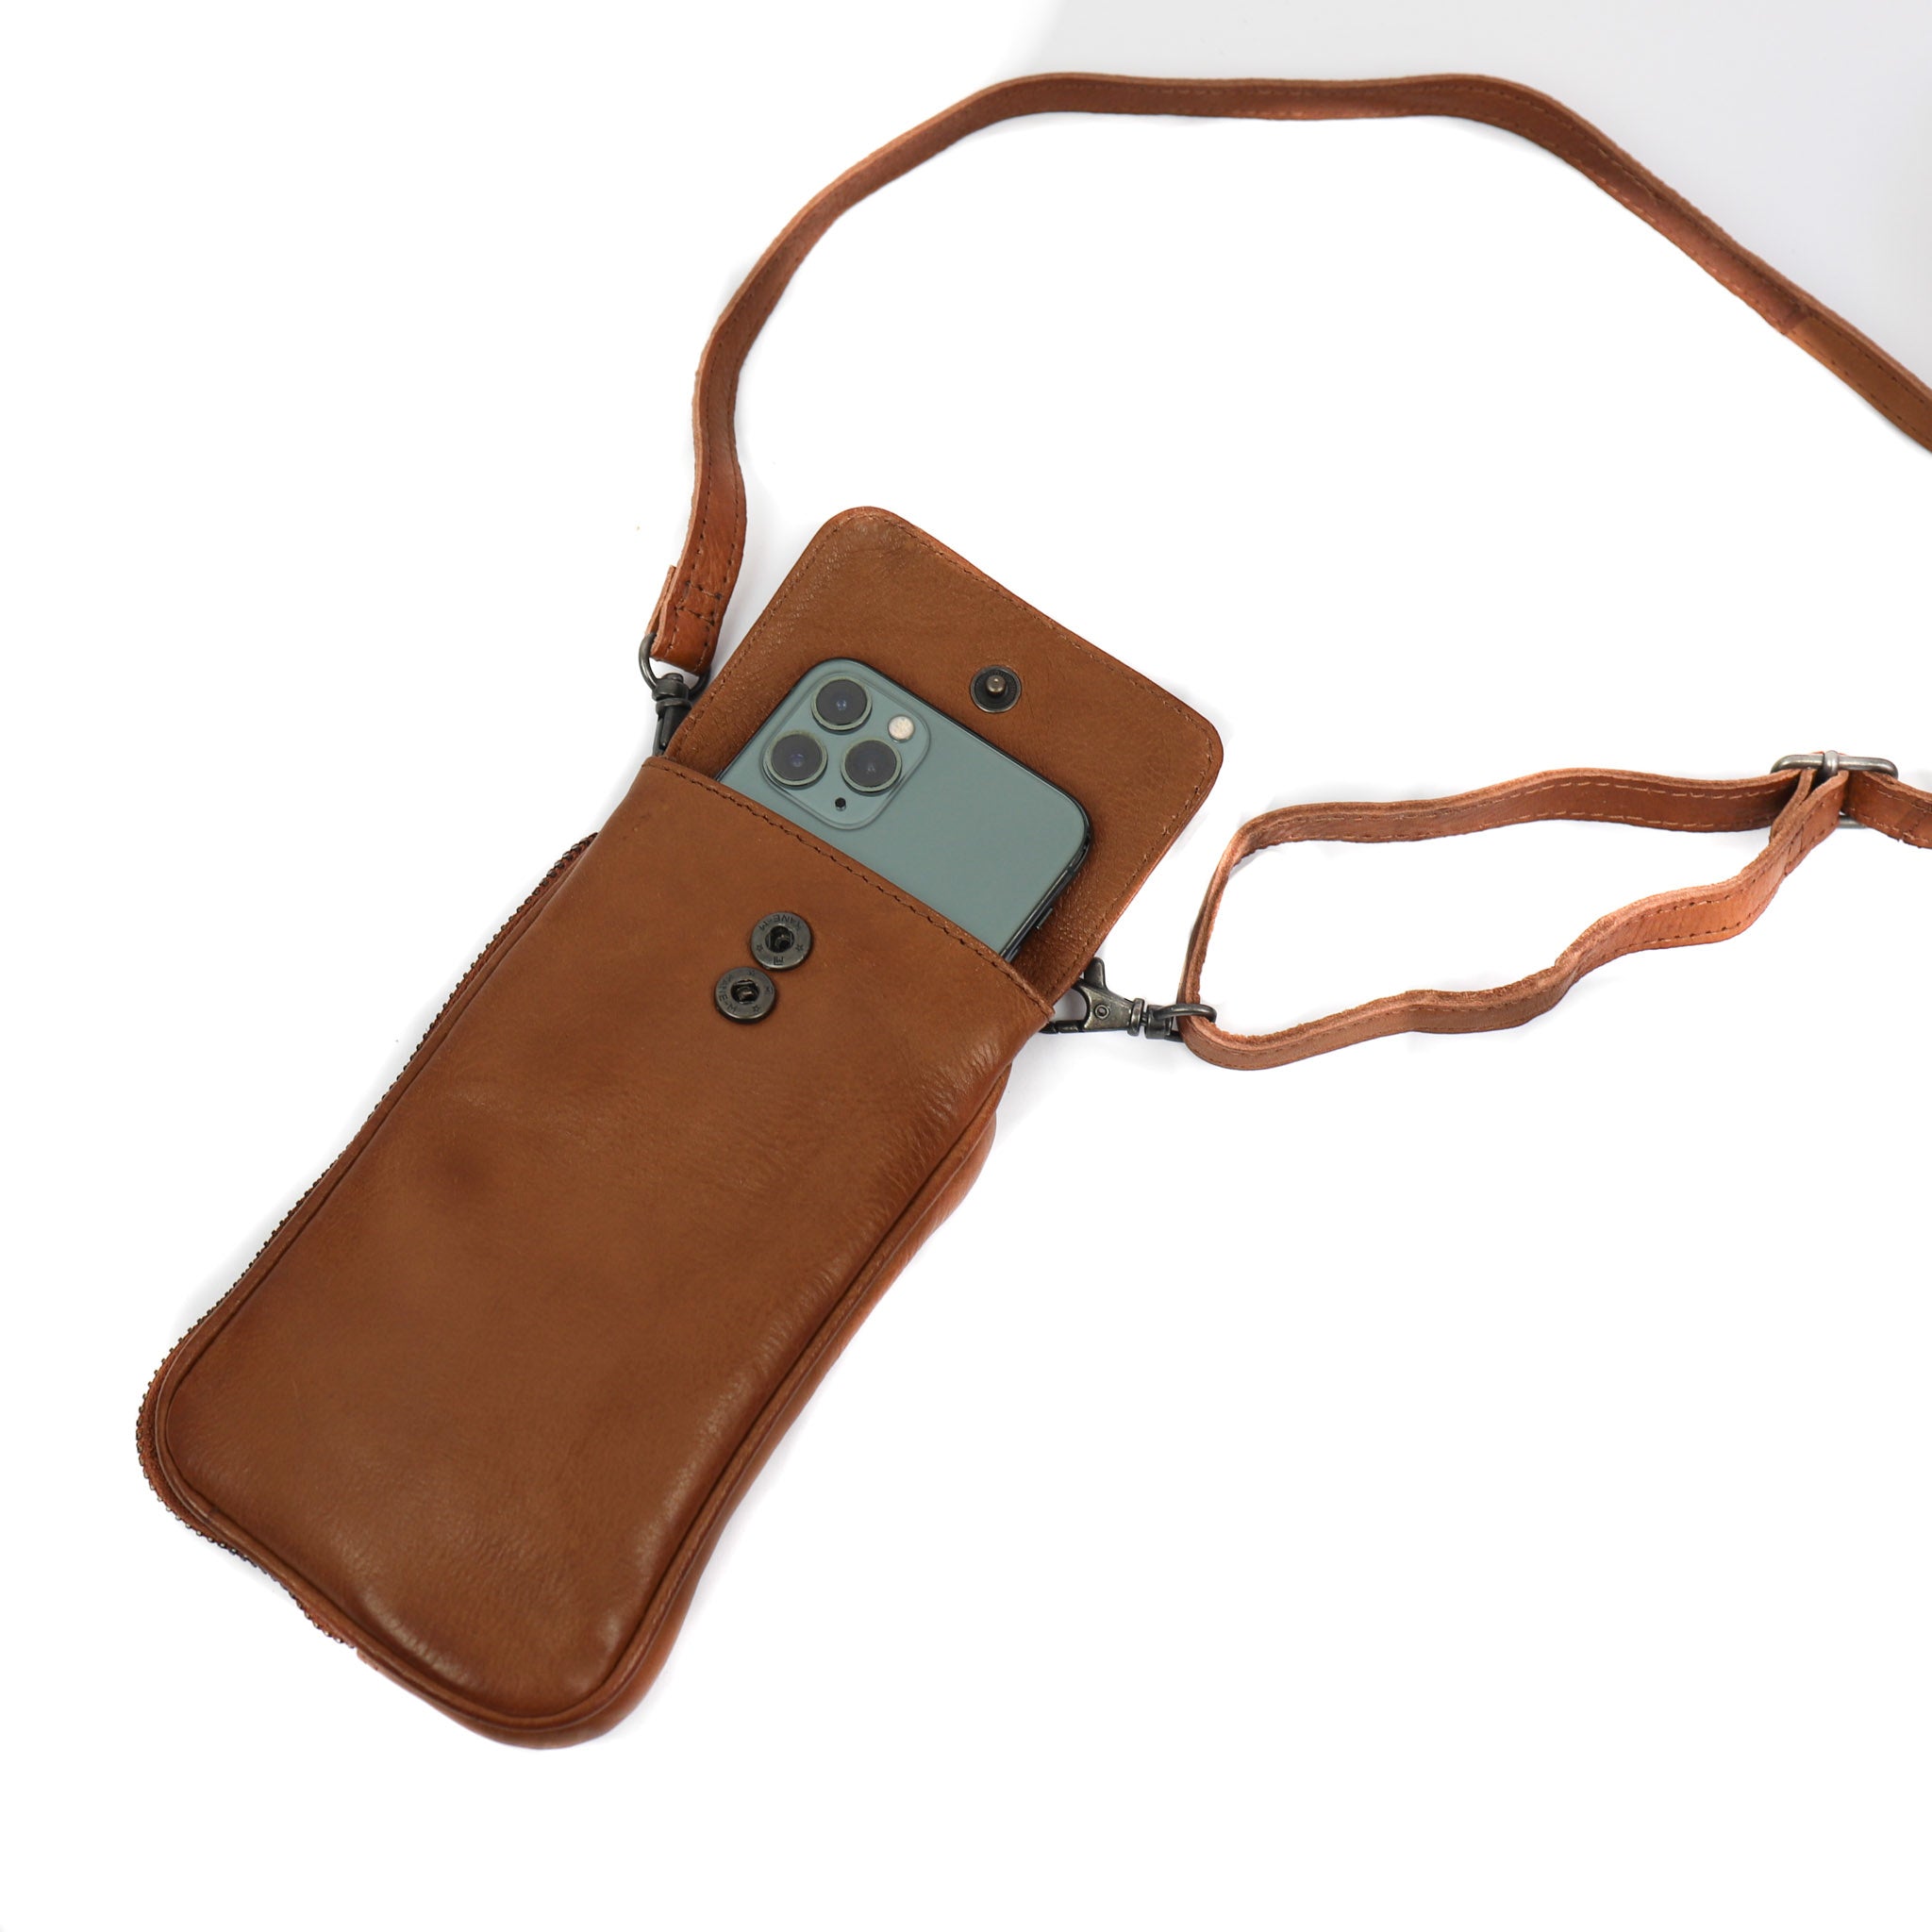 Phone bag 'Ahana' cognac - CP 2106